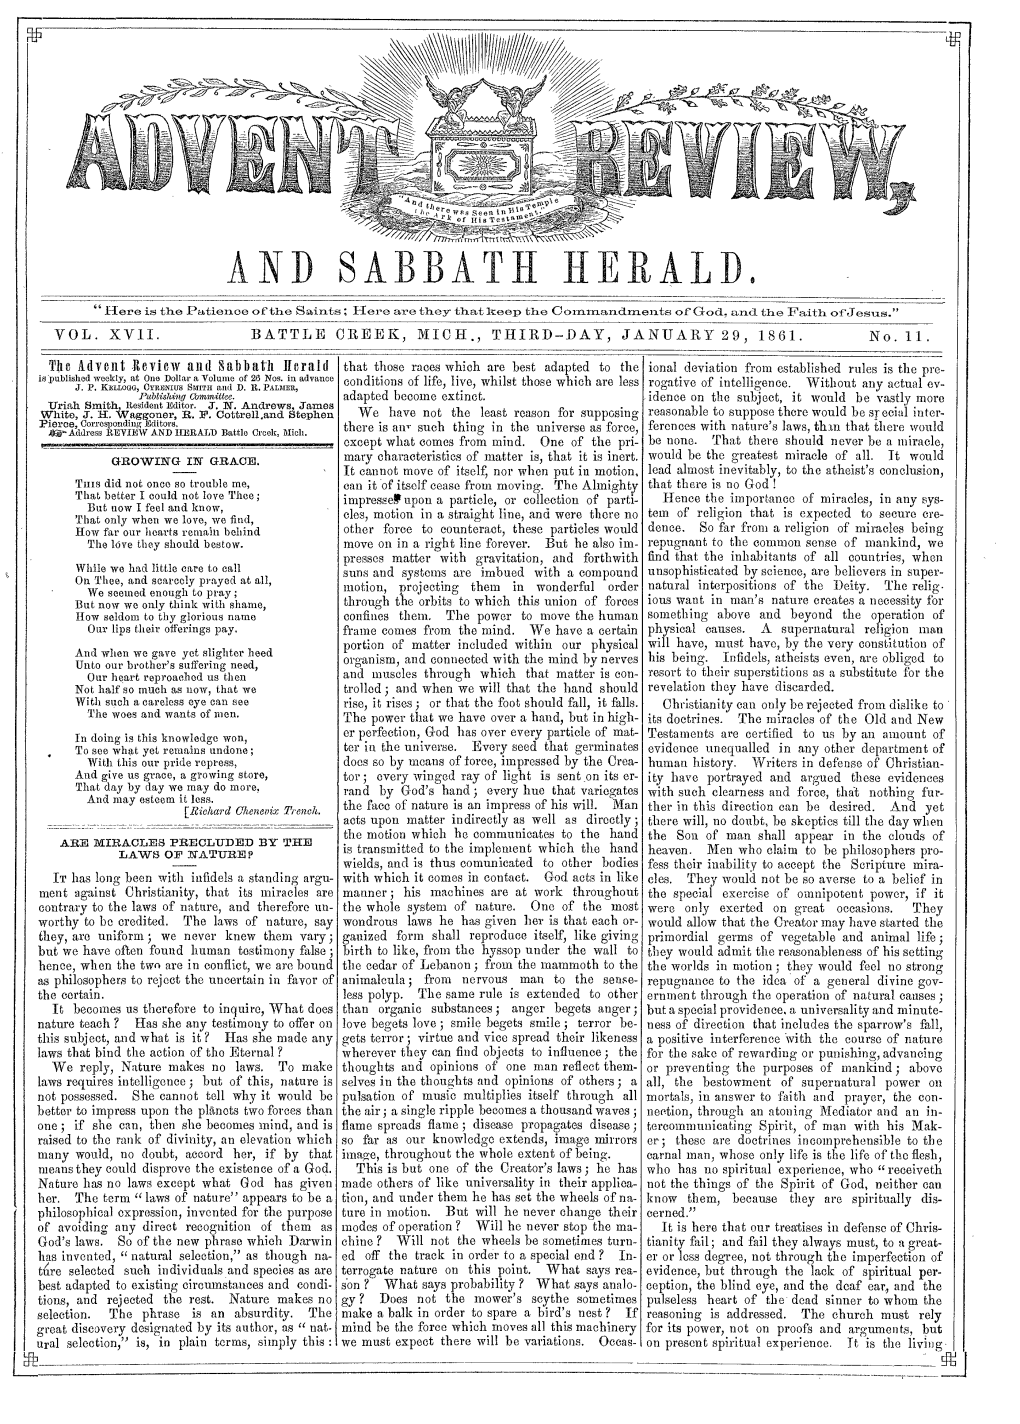 And Sabbath Herald